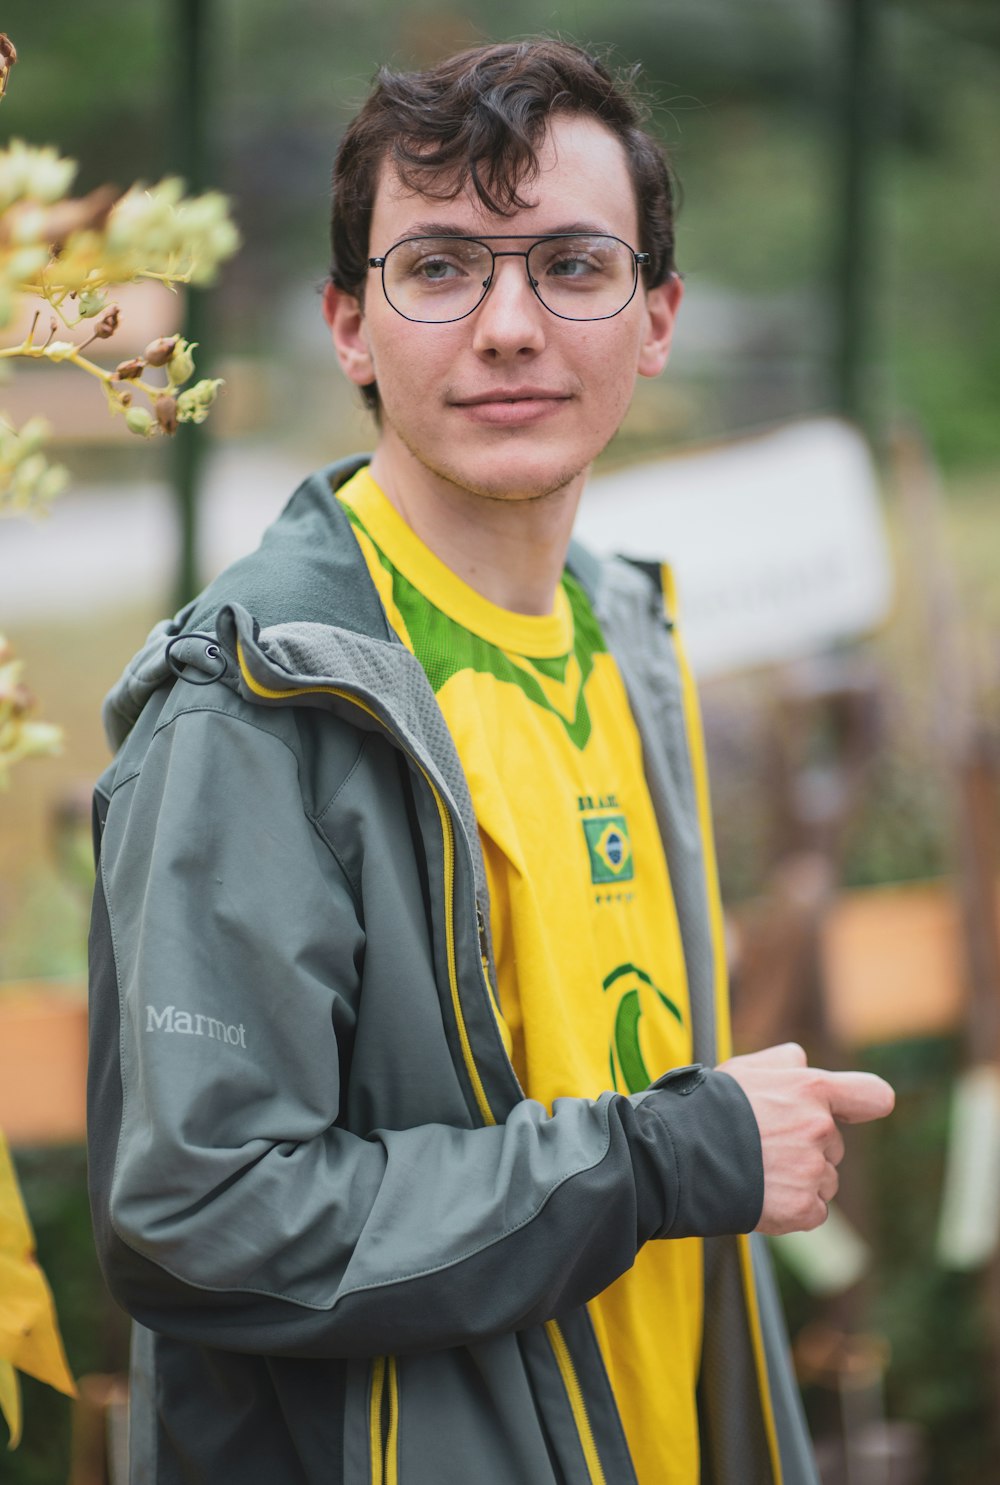 man in Brazil jersey and gray jacket wearing eyeglasses